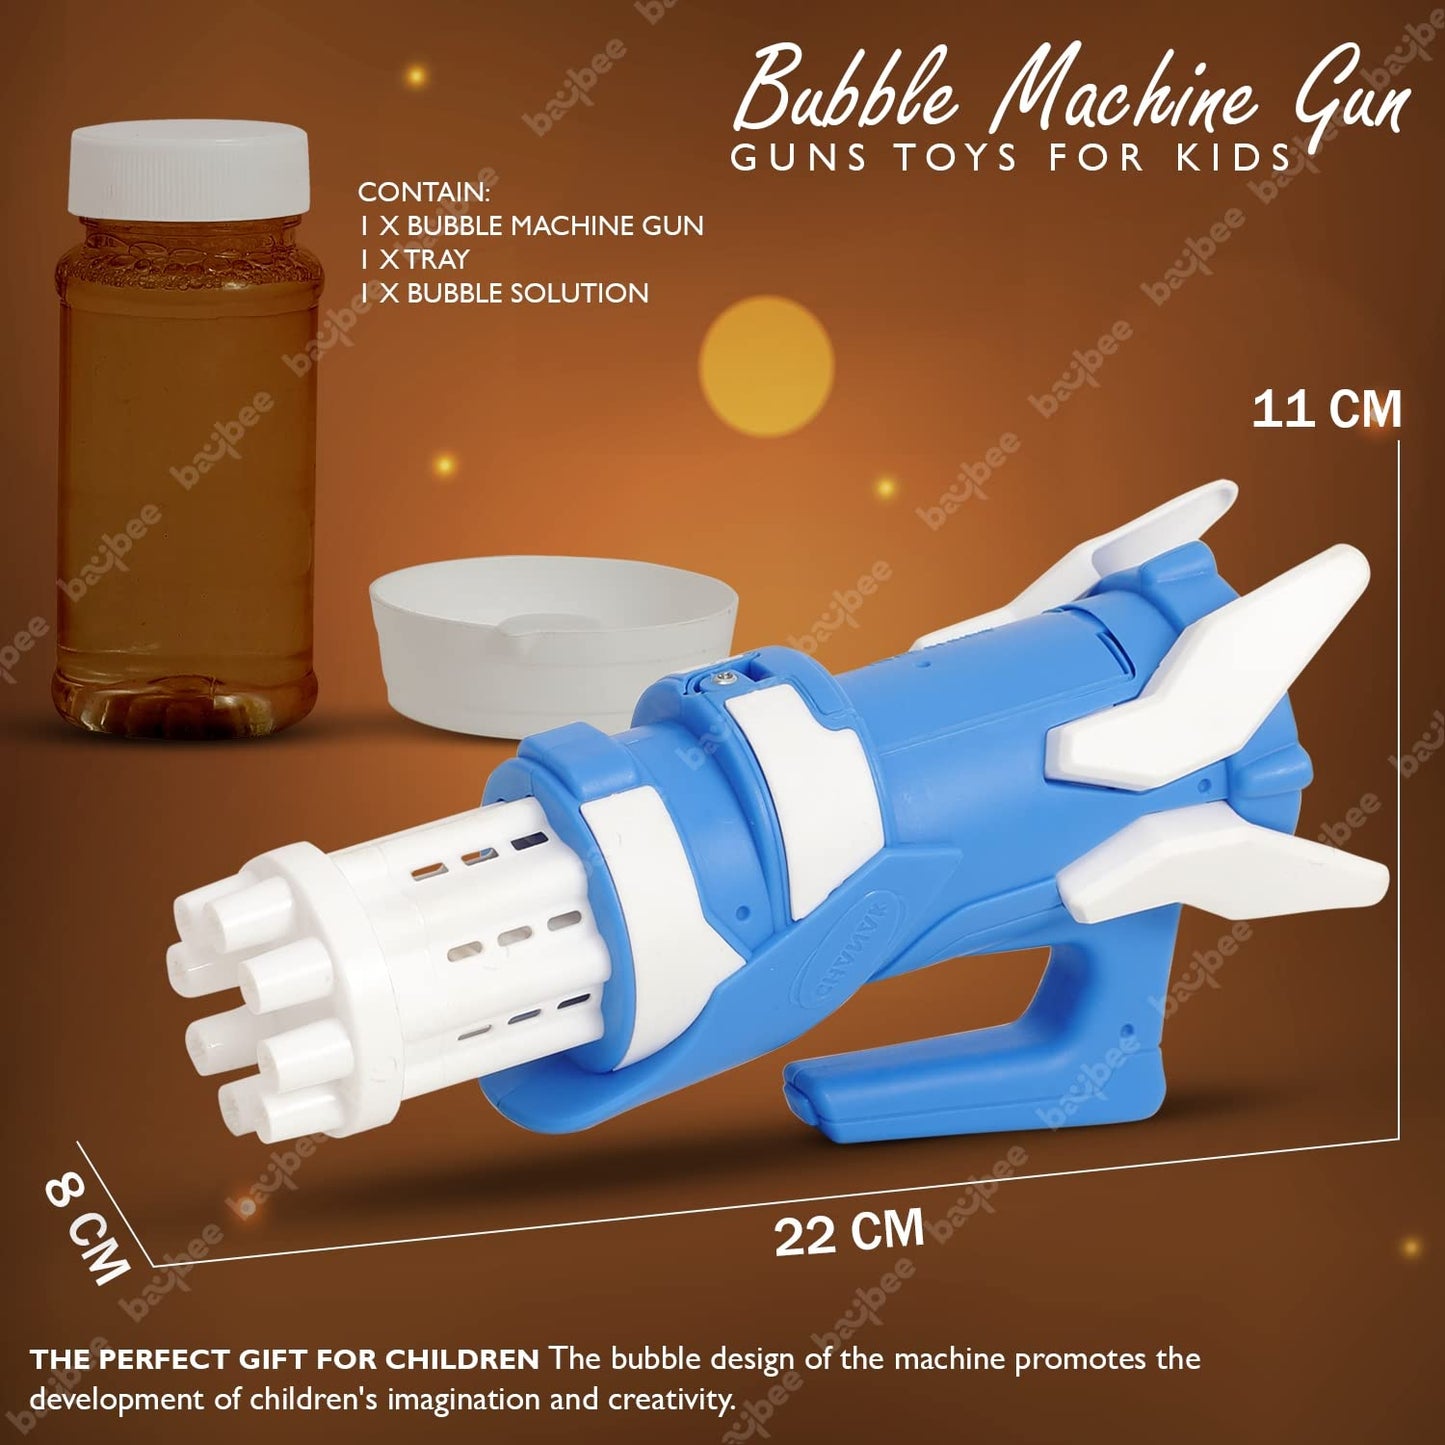 Baybee Electric Gatling Bubble Machine Gun Toys for Kids